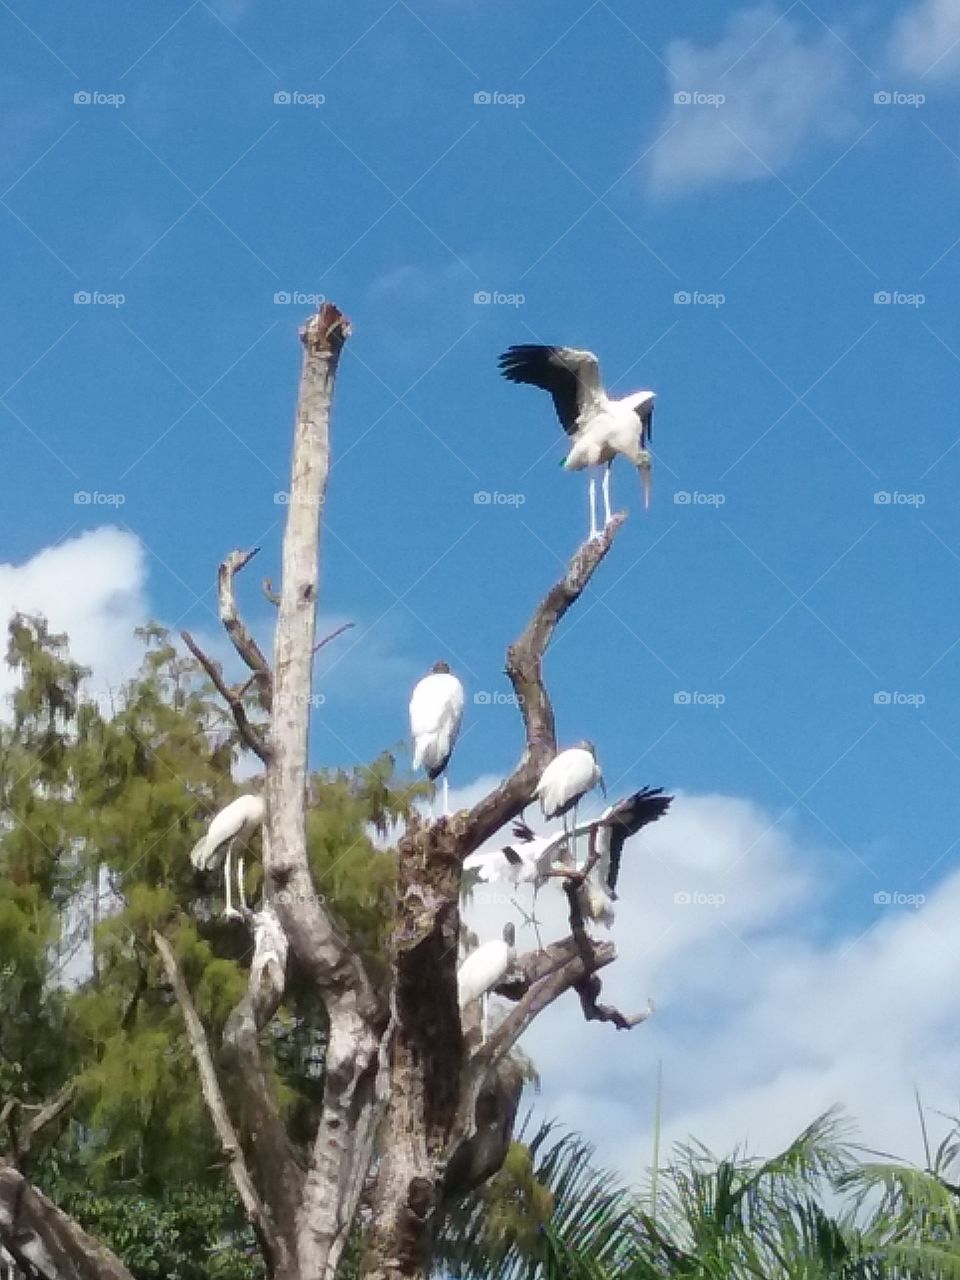 Florida birds perched in natural habitat